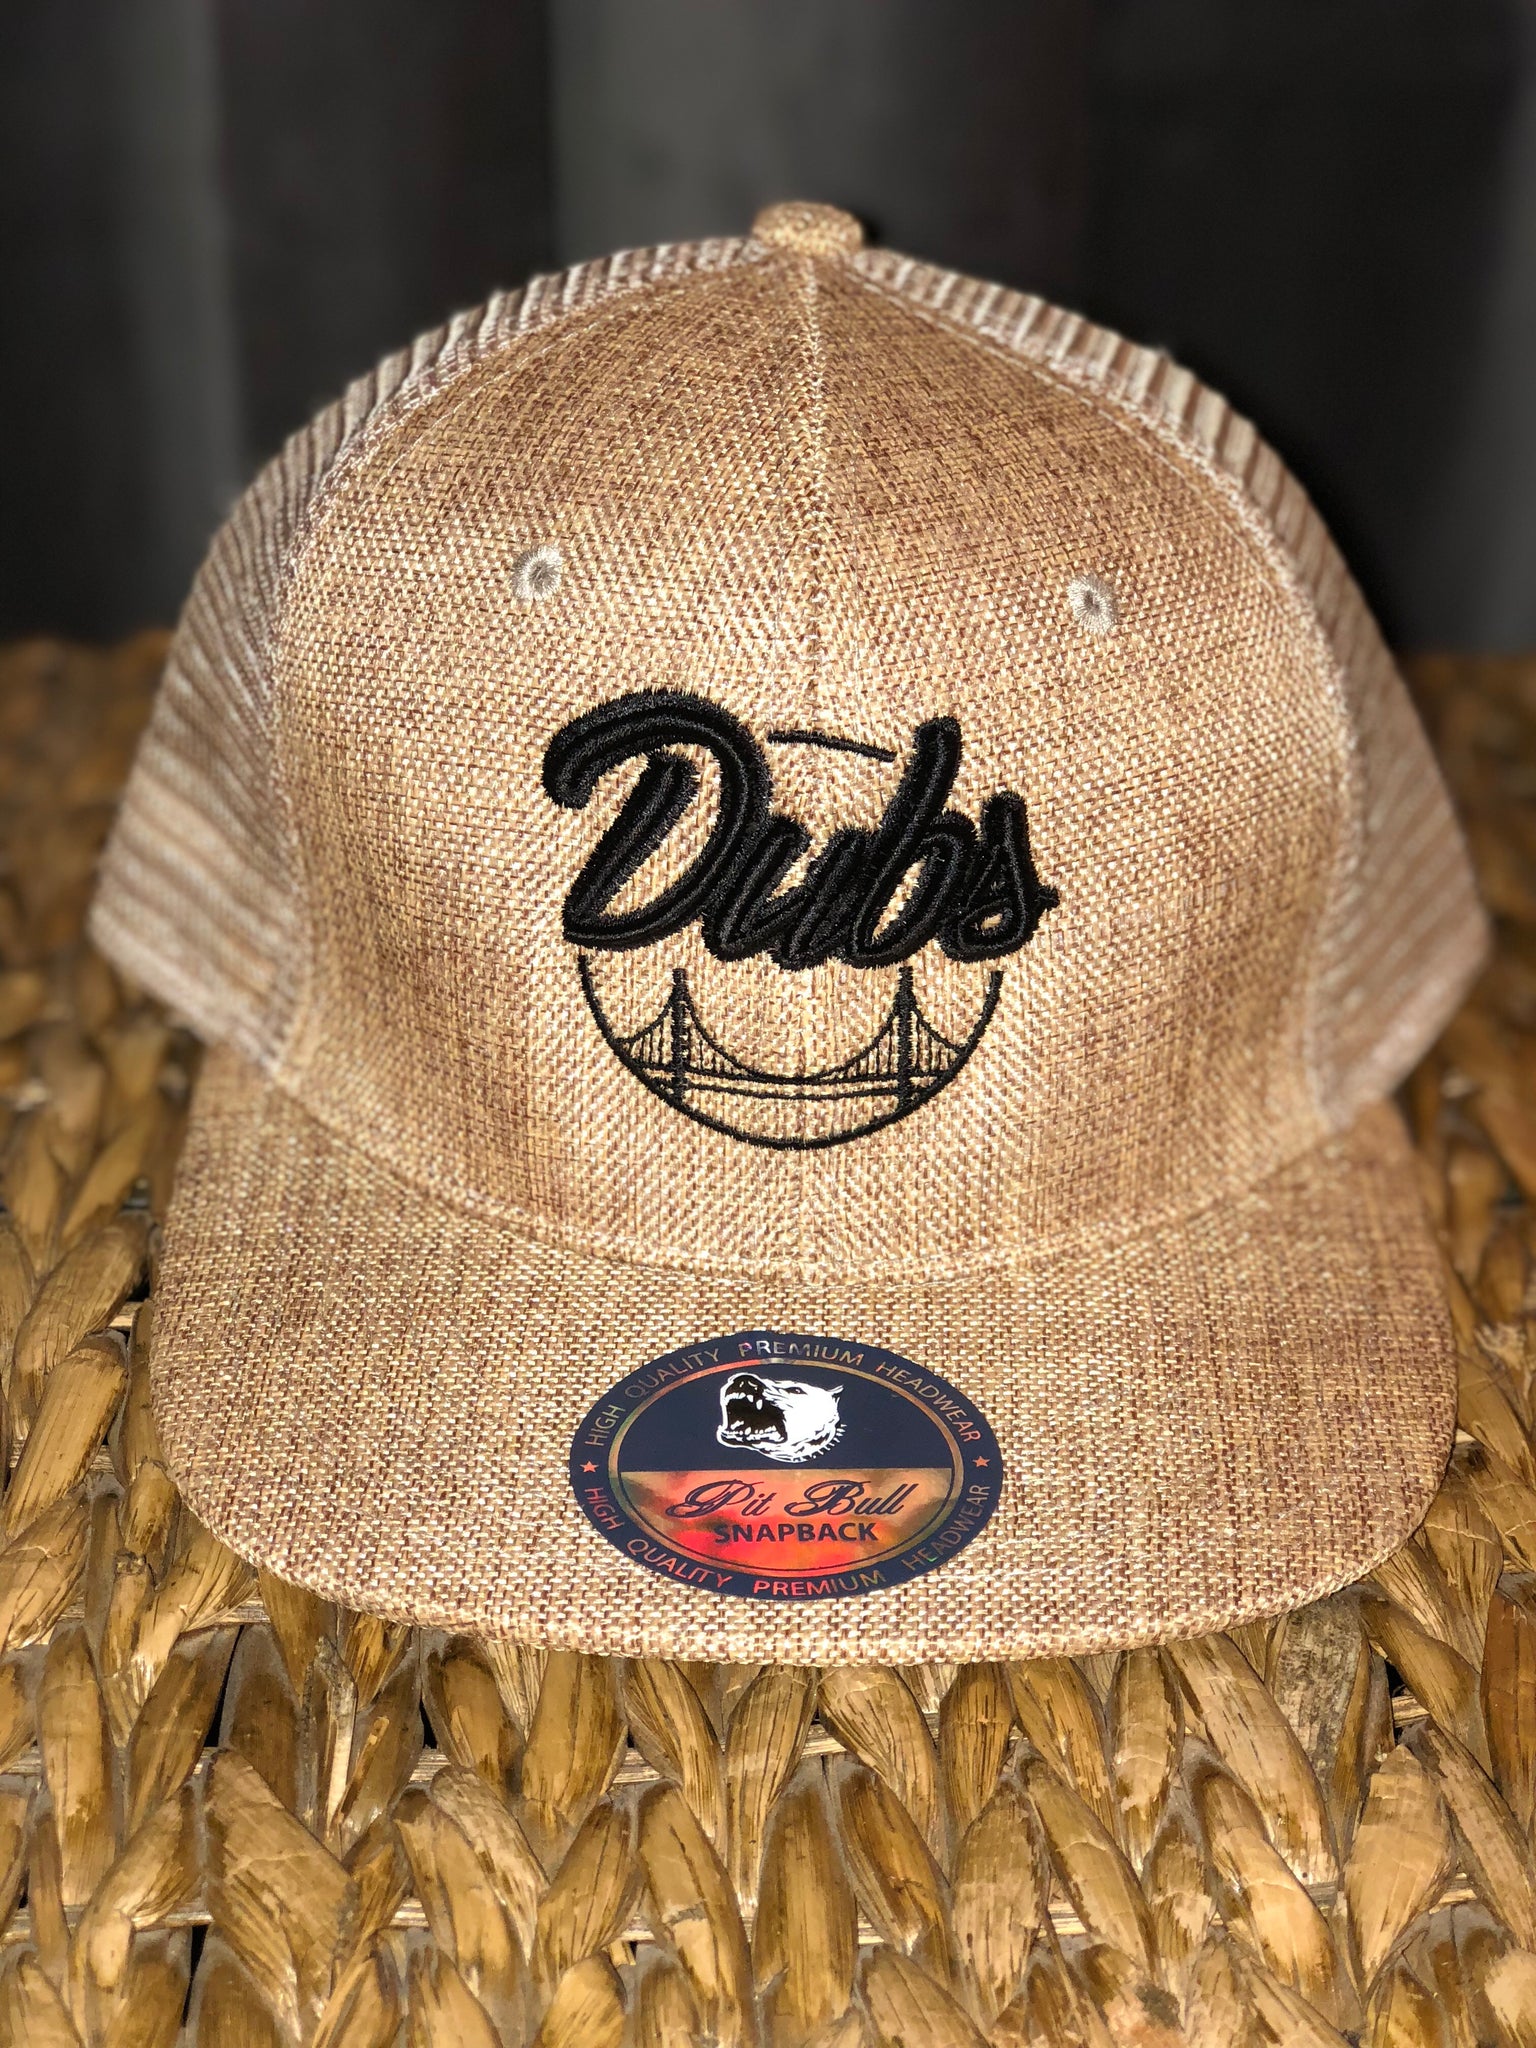 Dubs Trucker Mesh SnapBack Hat